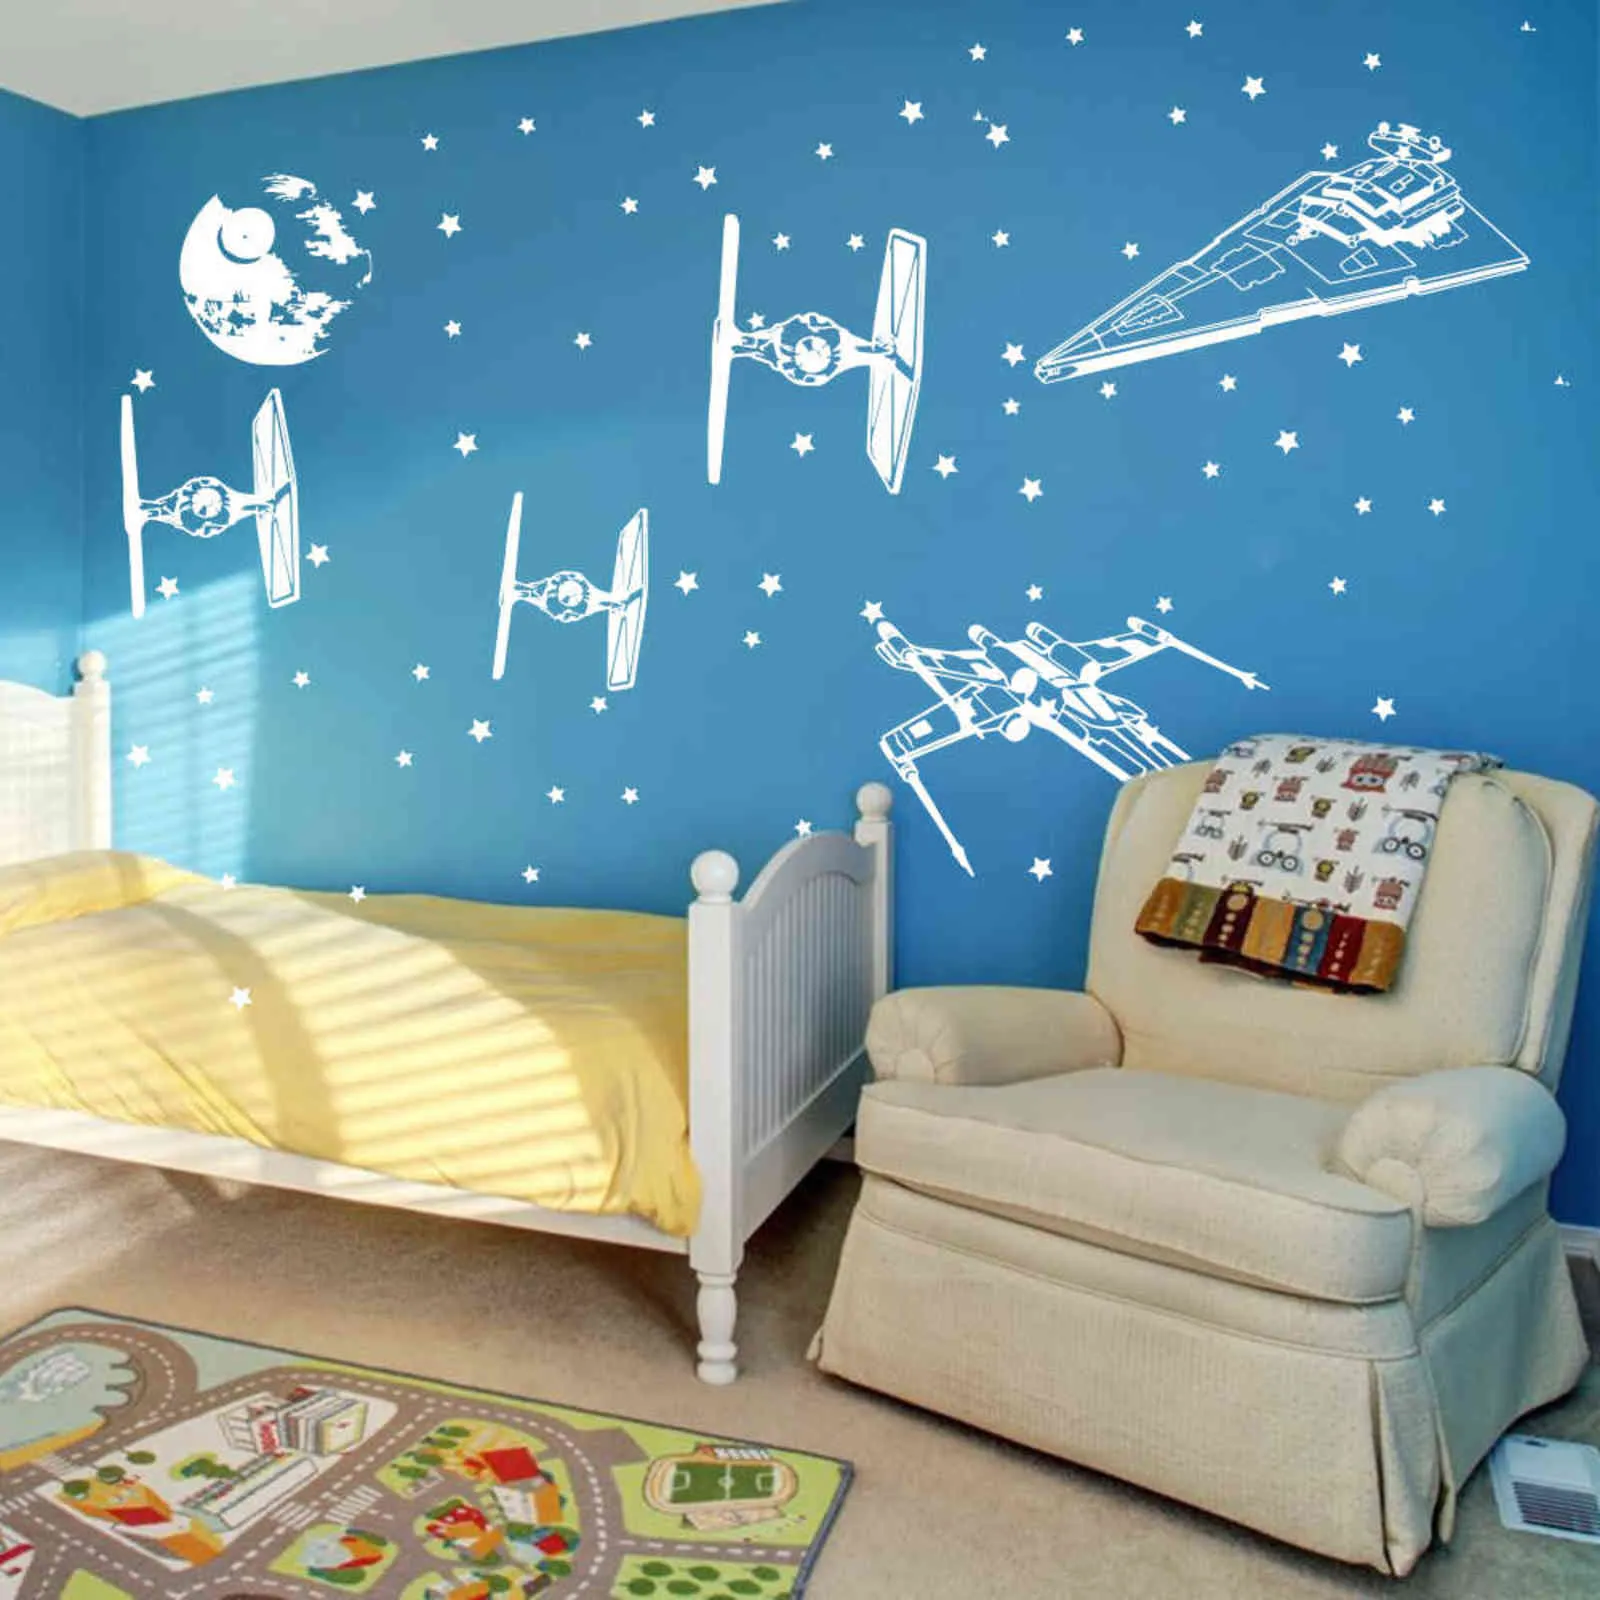 Spacecraft Millemium Falcon X Wing Fighter Wall Sticker Rocket Starfighters War Wall Decal Kids Room Nursery Vinyl Home Decor 211124